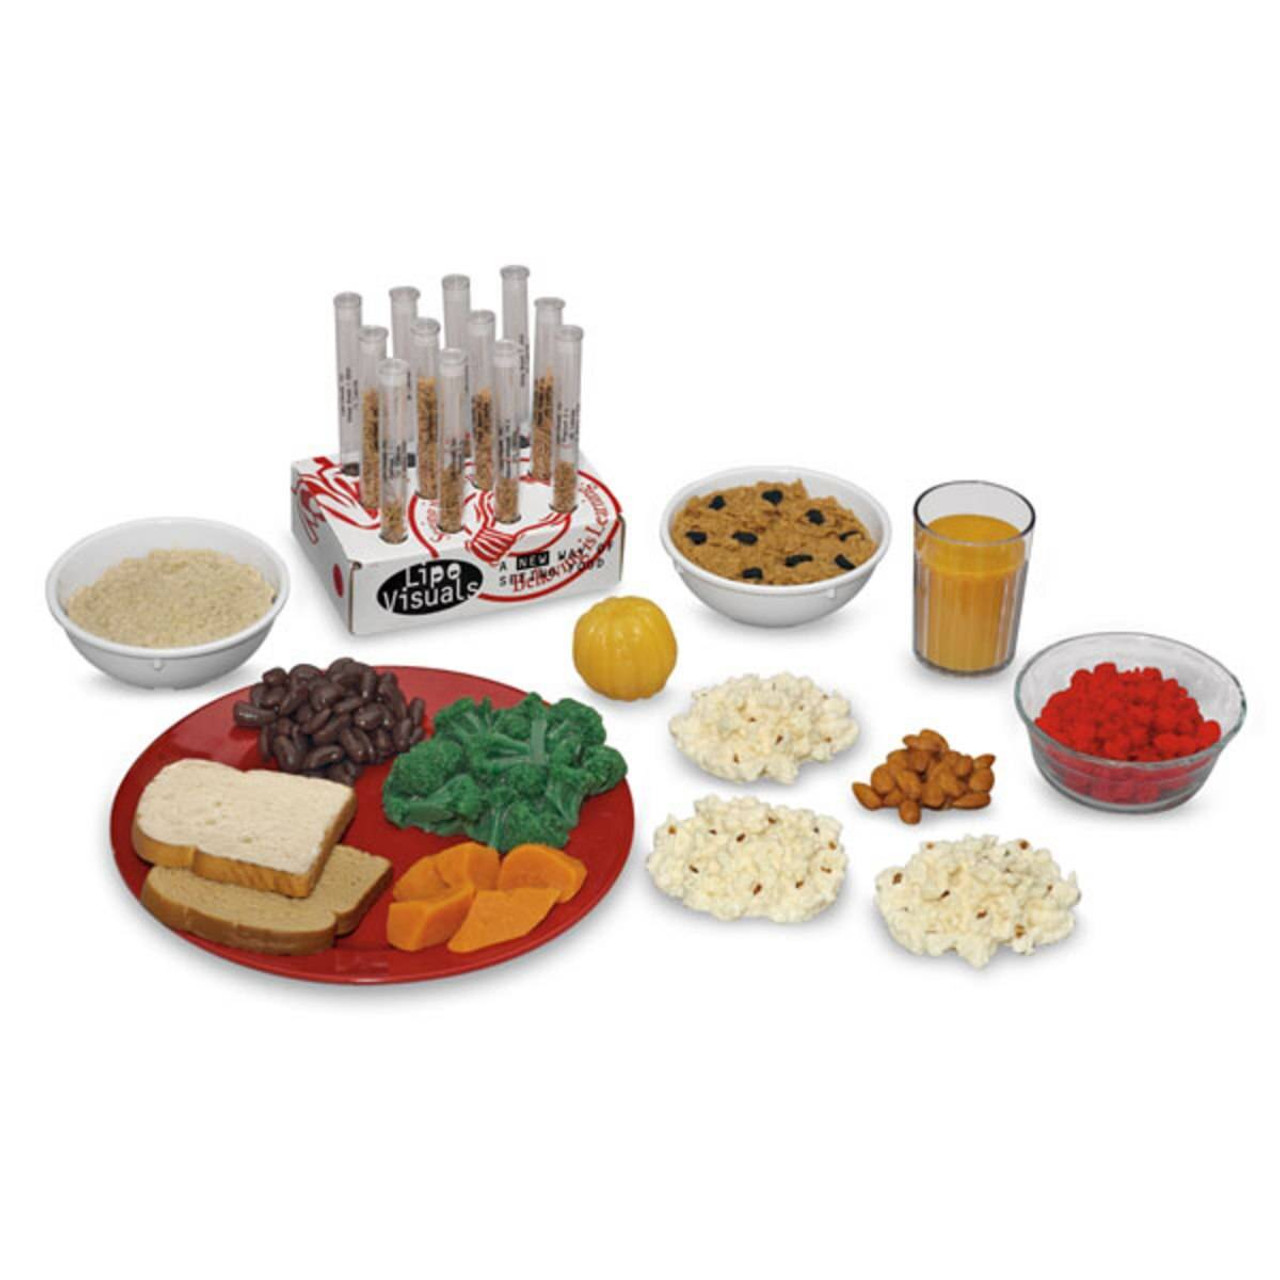 Nasco Life/form Complete MyPlate Food Replica Kit